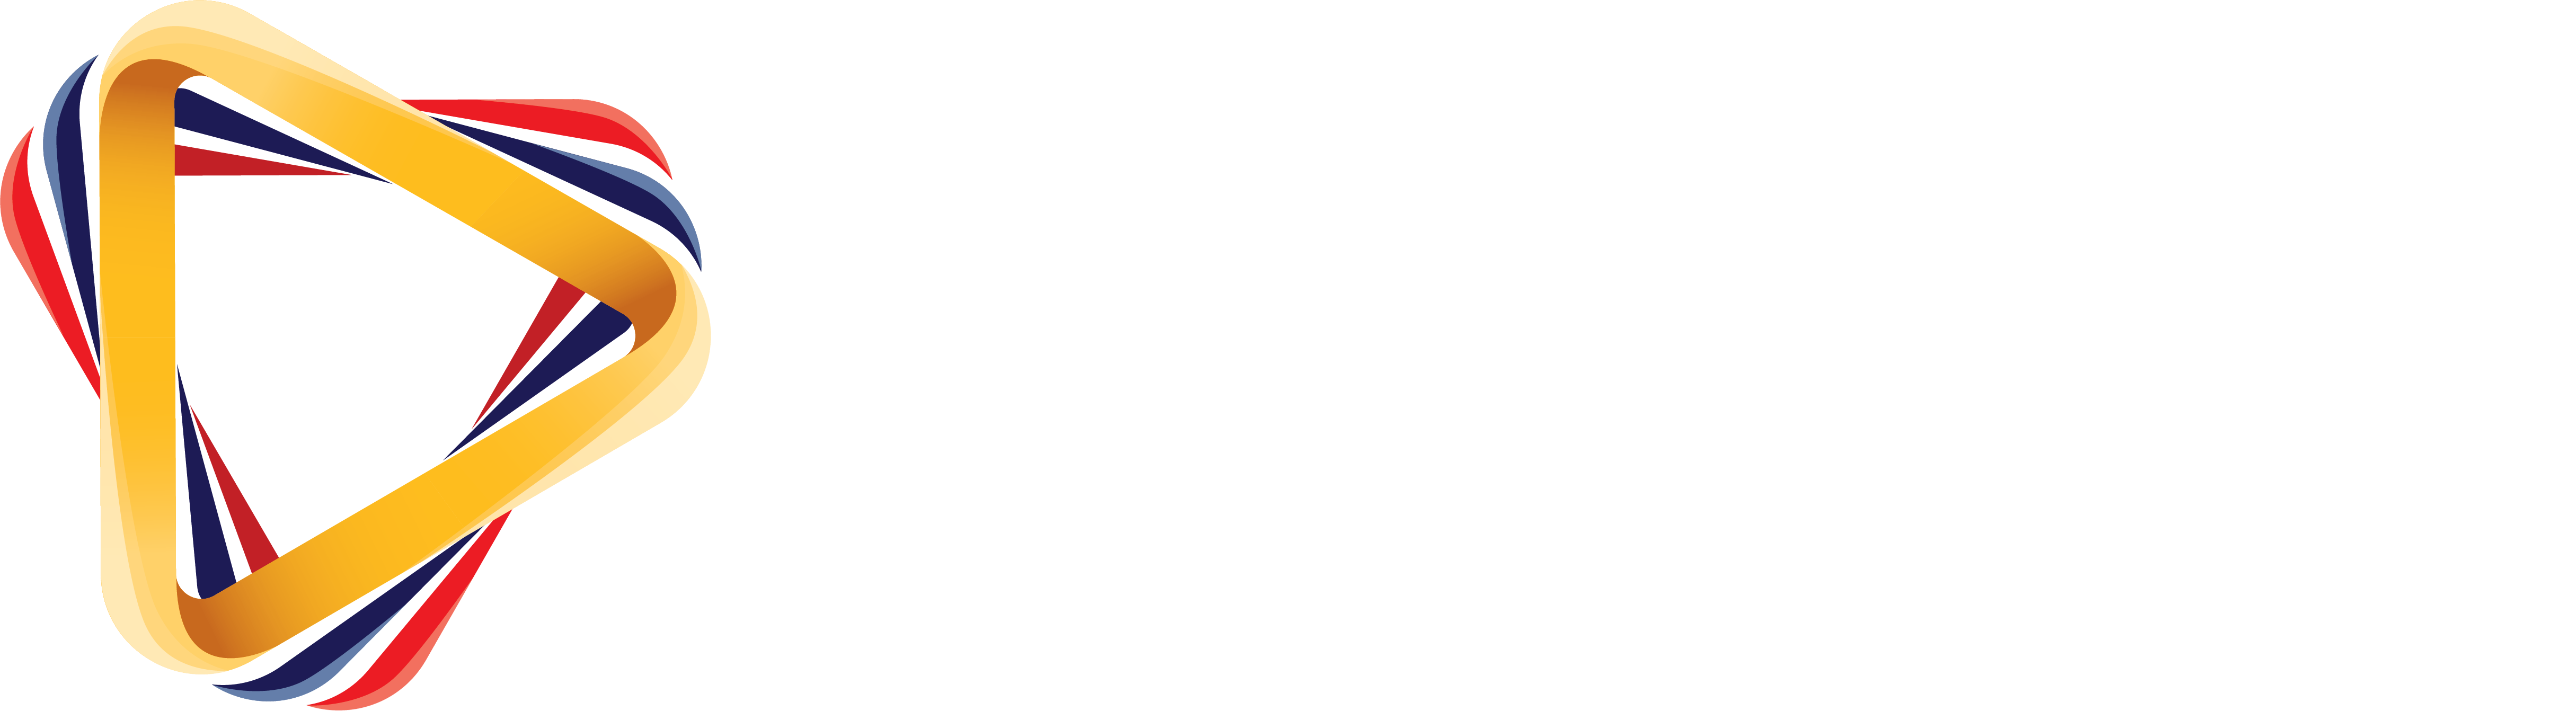 Mekong Pro